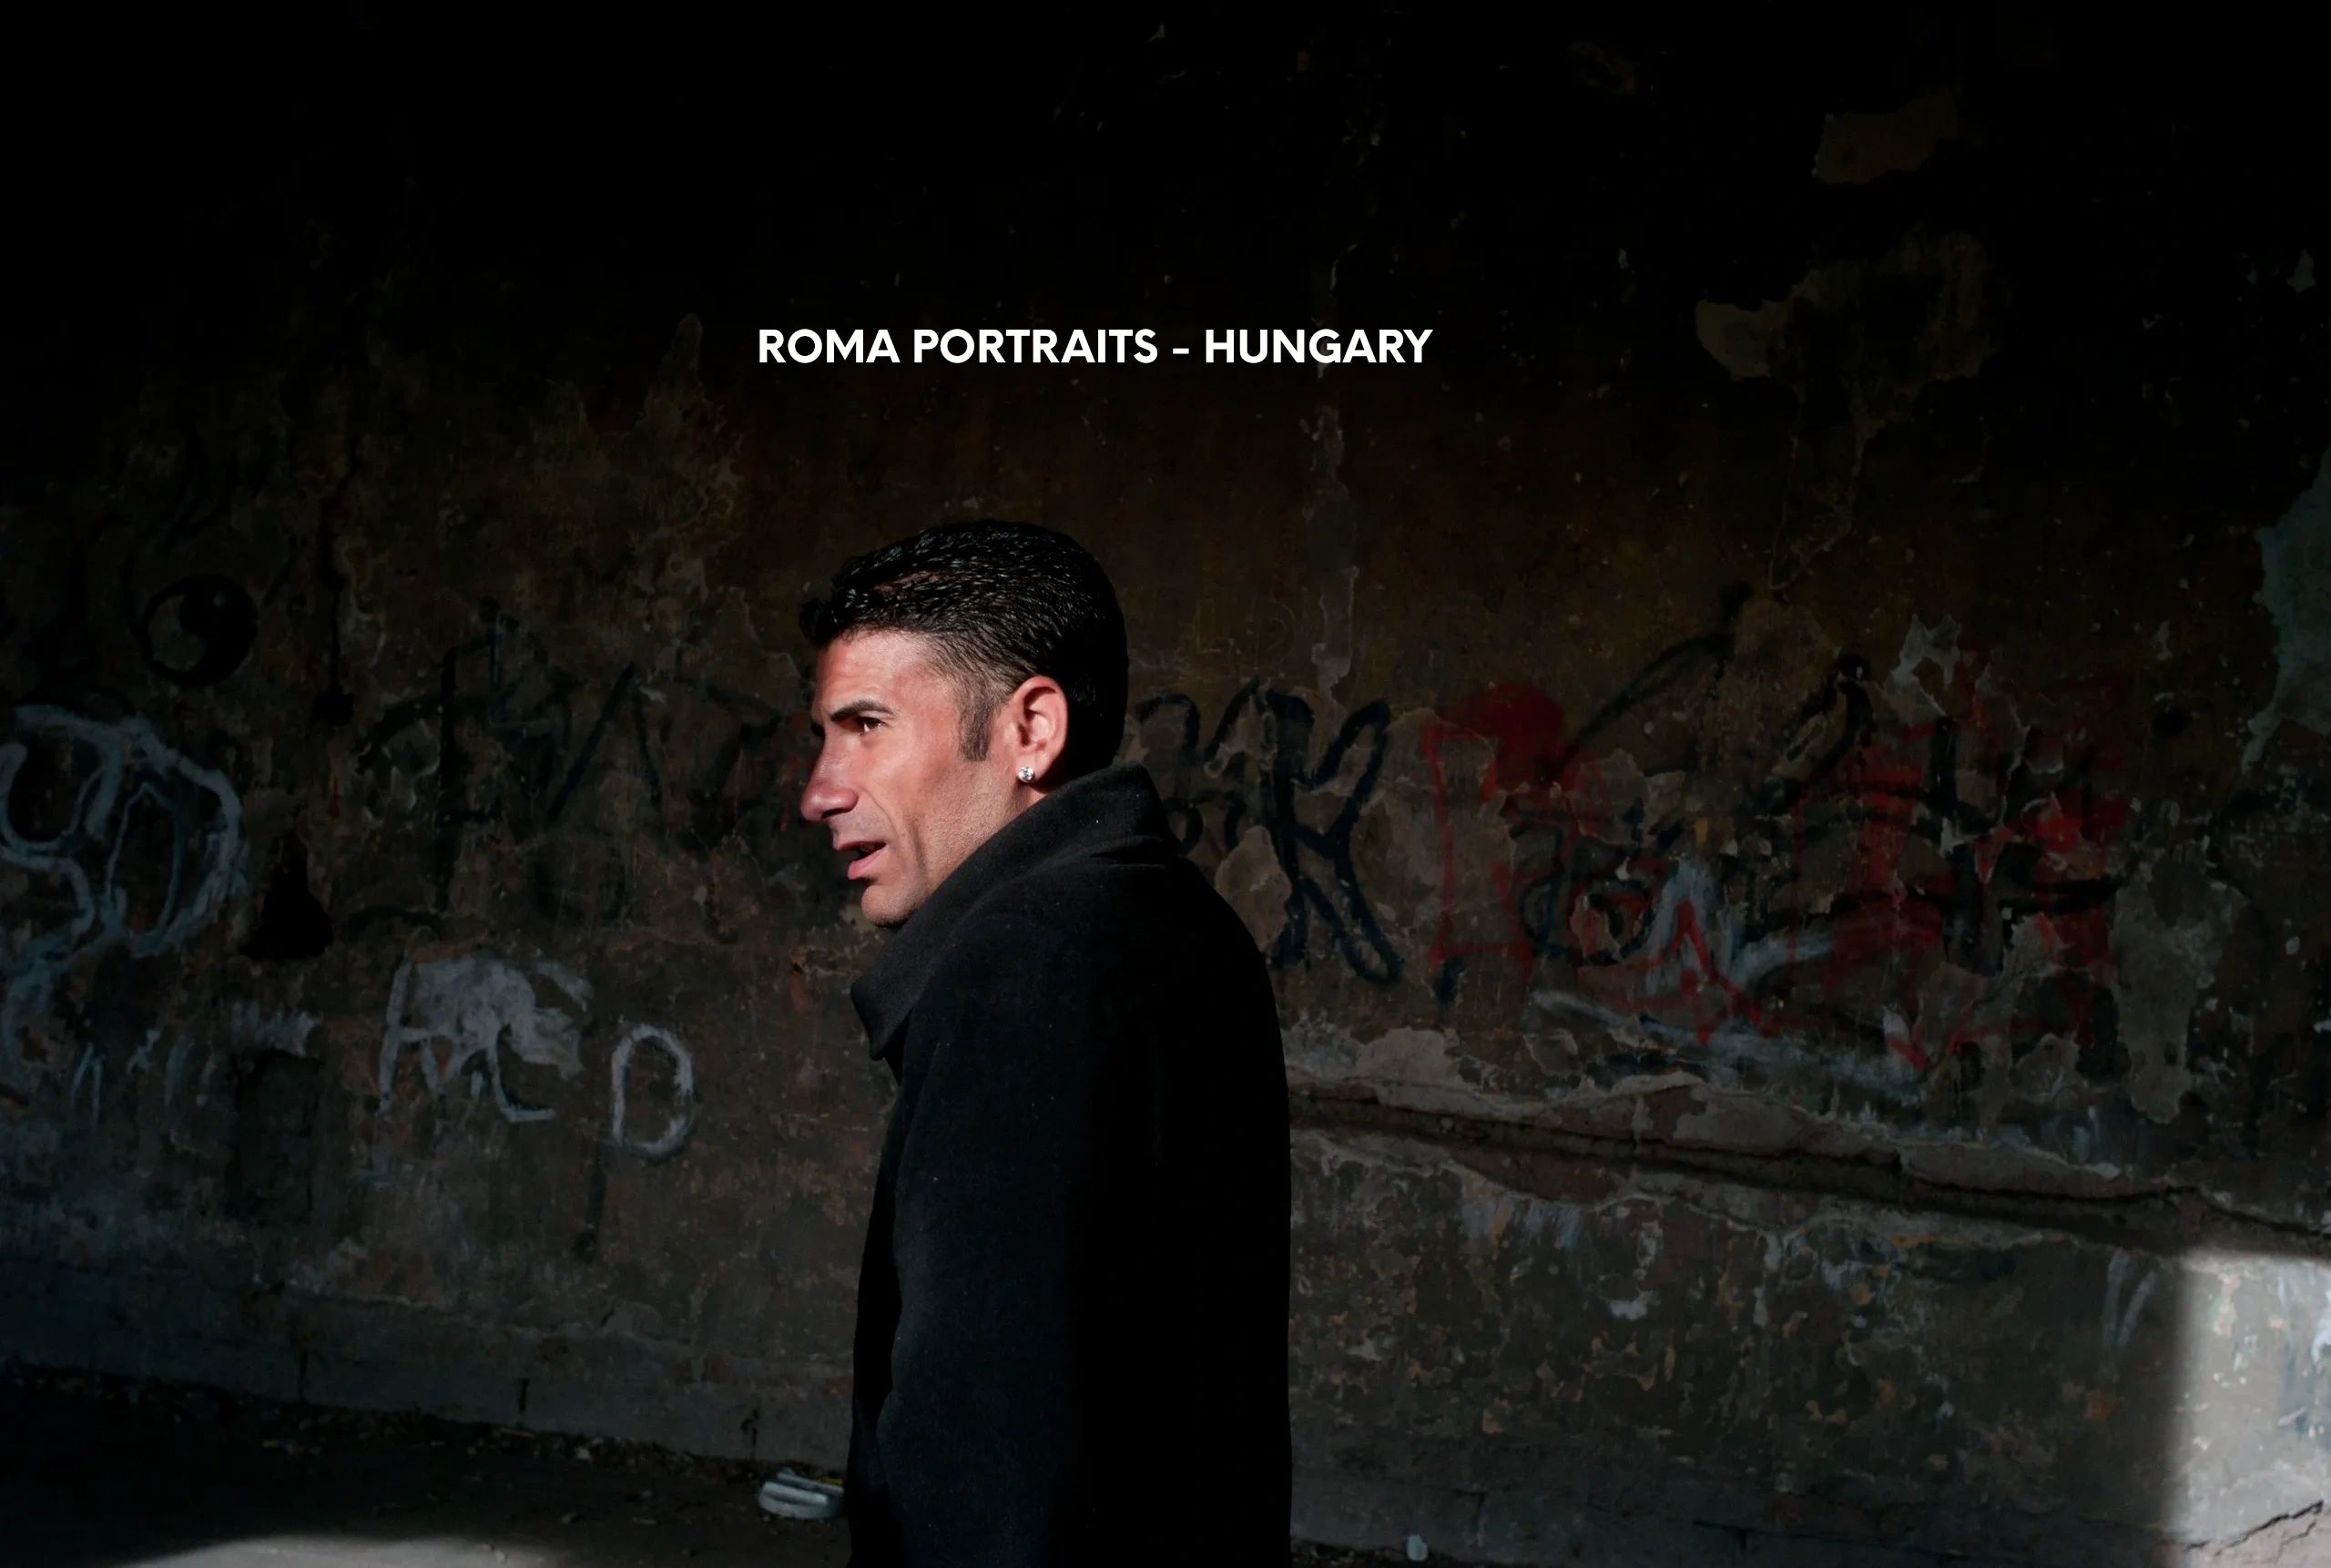 ROMA PORTRAITS - HUNGARY